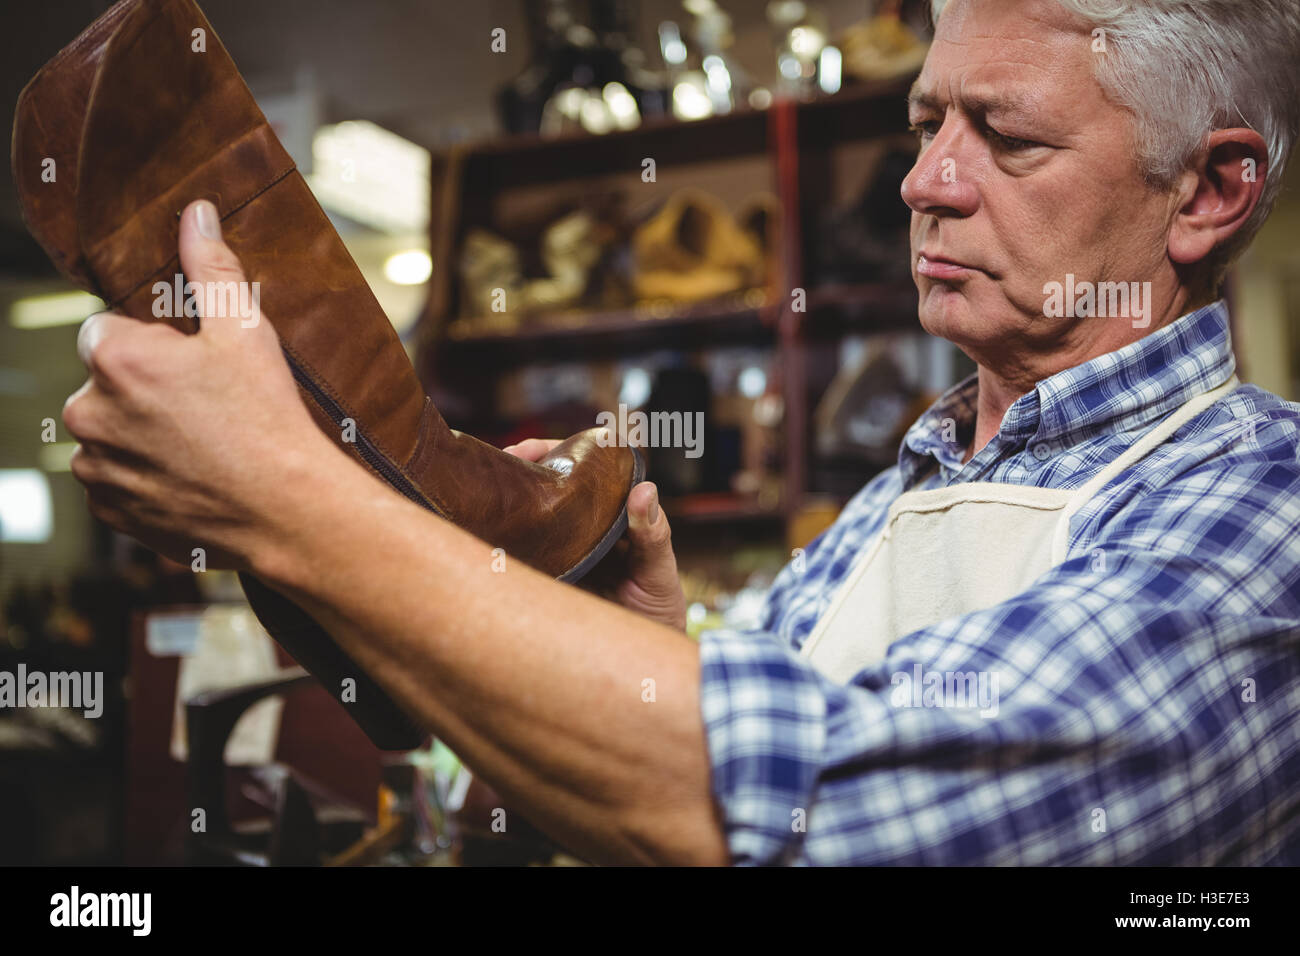 Shoemaker examining a shoe Stock Photo